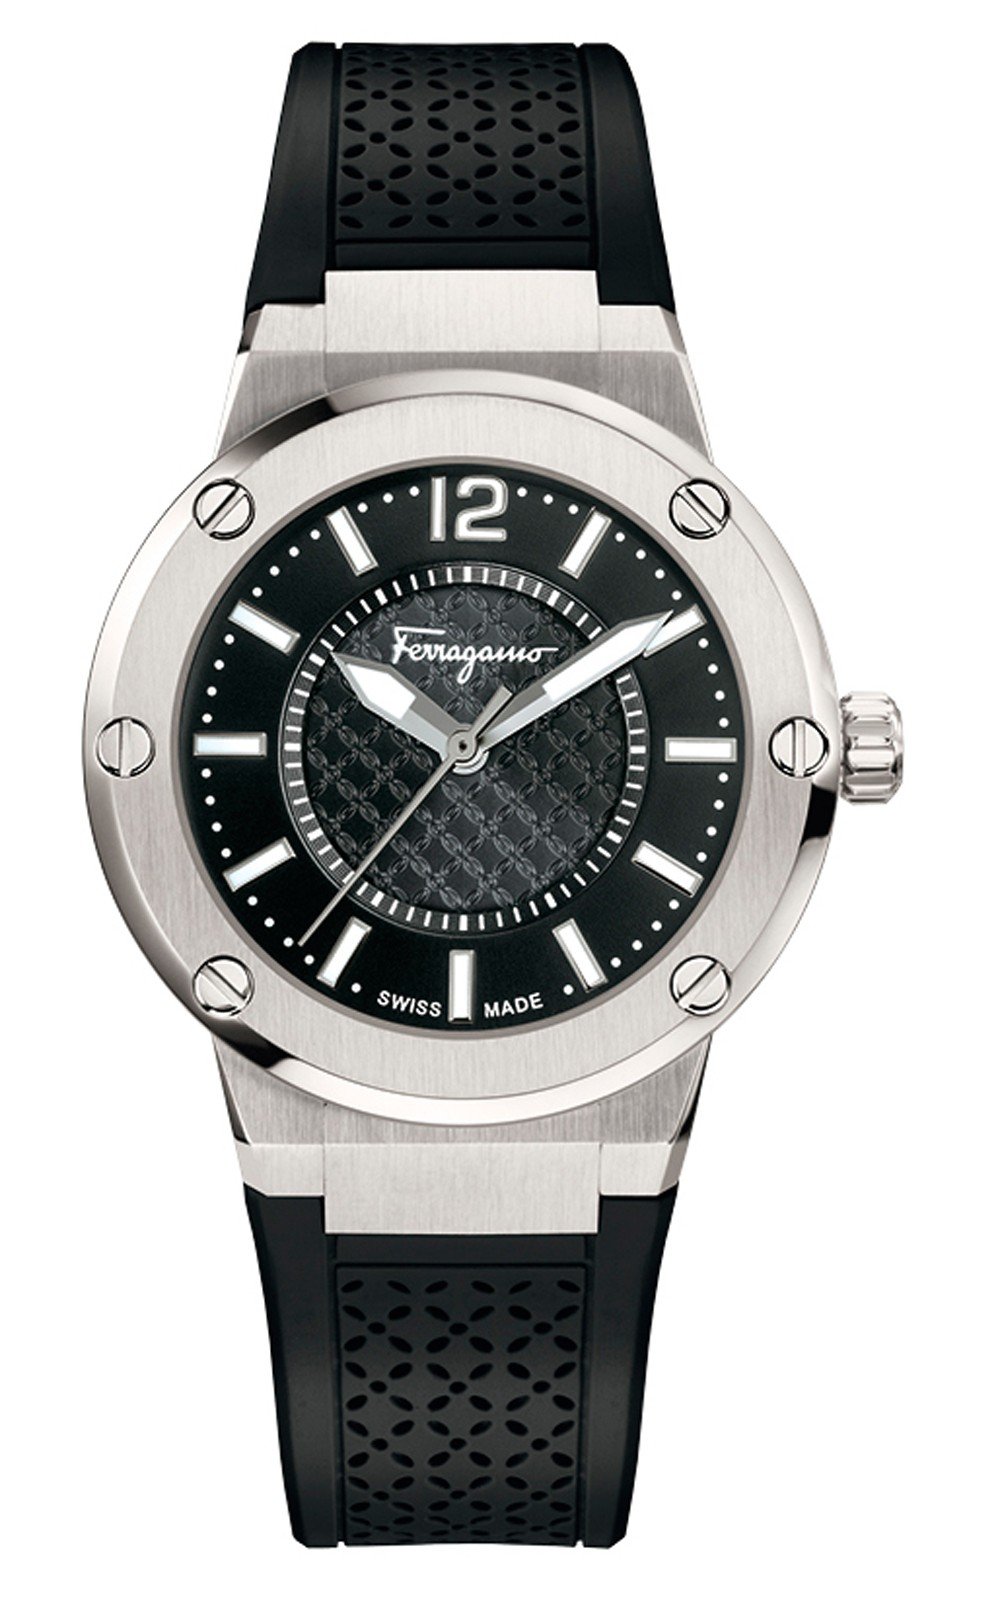 Đồng hồ Salvatore Ferragamo F-80 Watch, 33mm FIG020015 likewatch.com